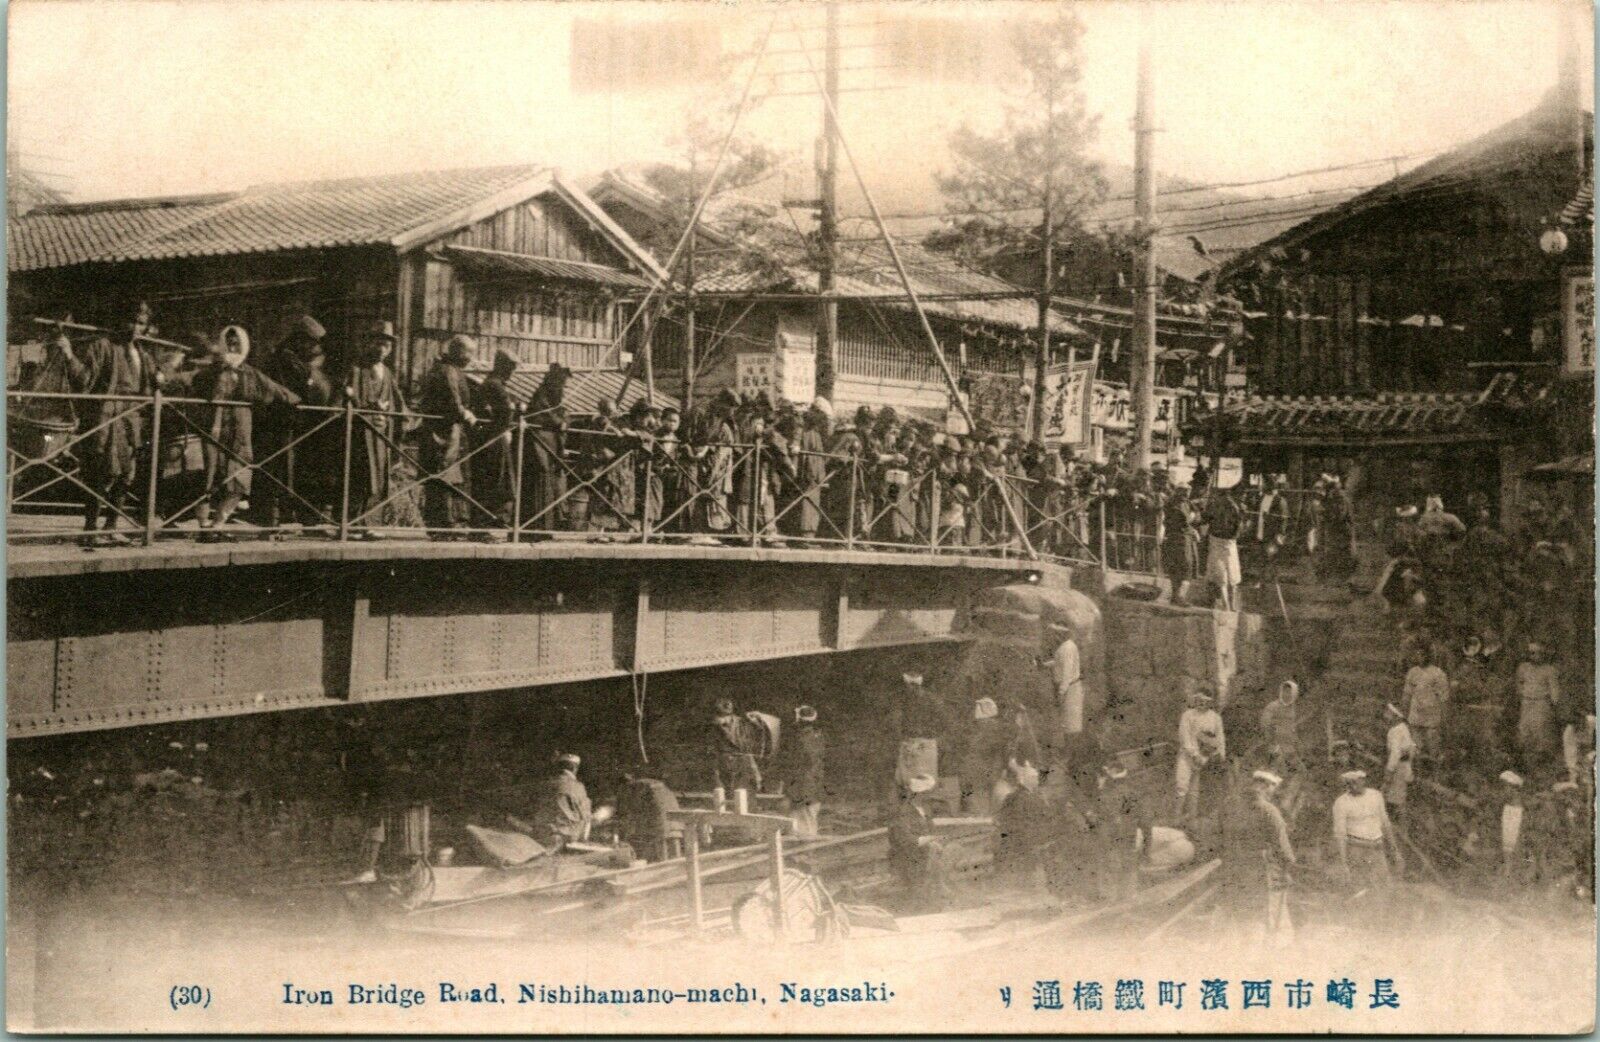 Vtg Postcard 1910s Japan Nagasaki Iron Bridge Road Nishihamano-Machu Unused